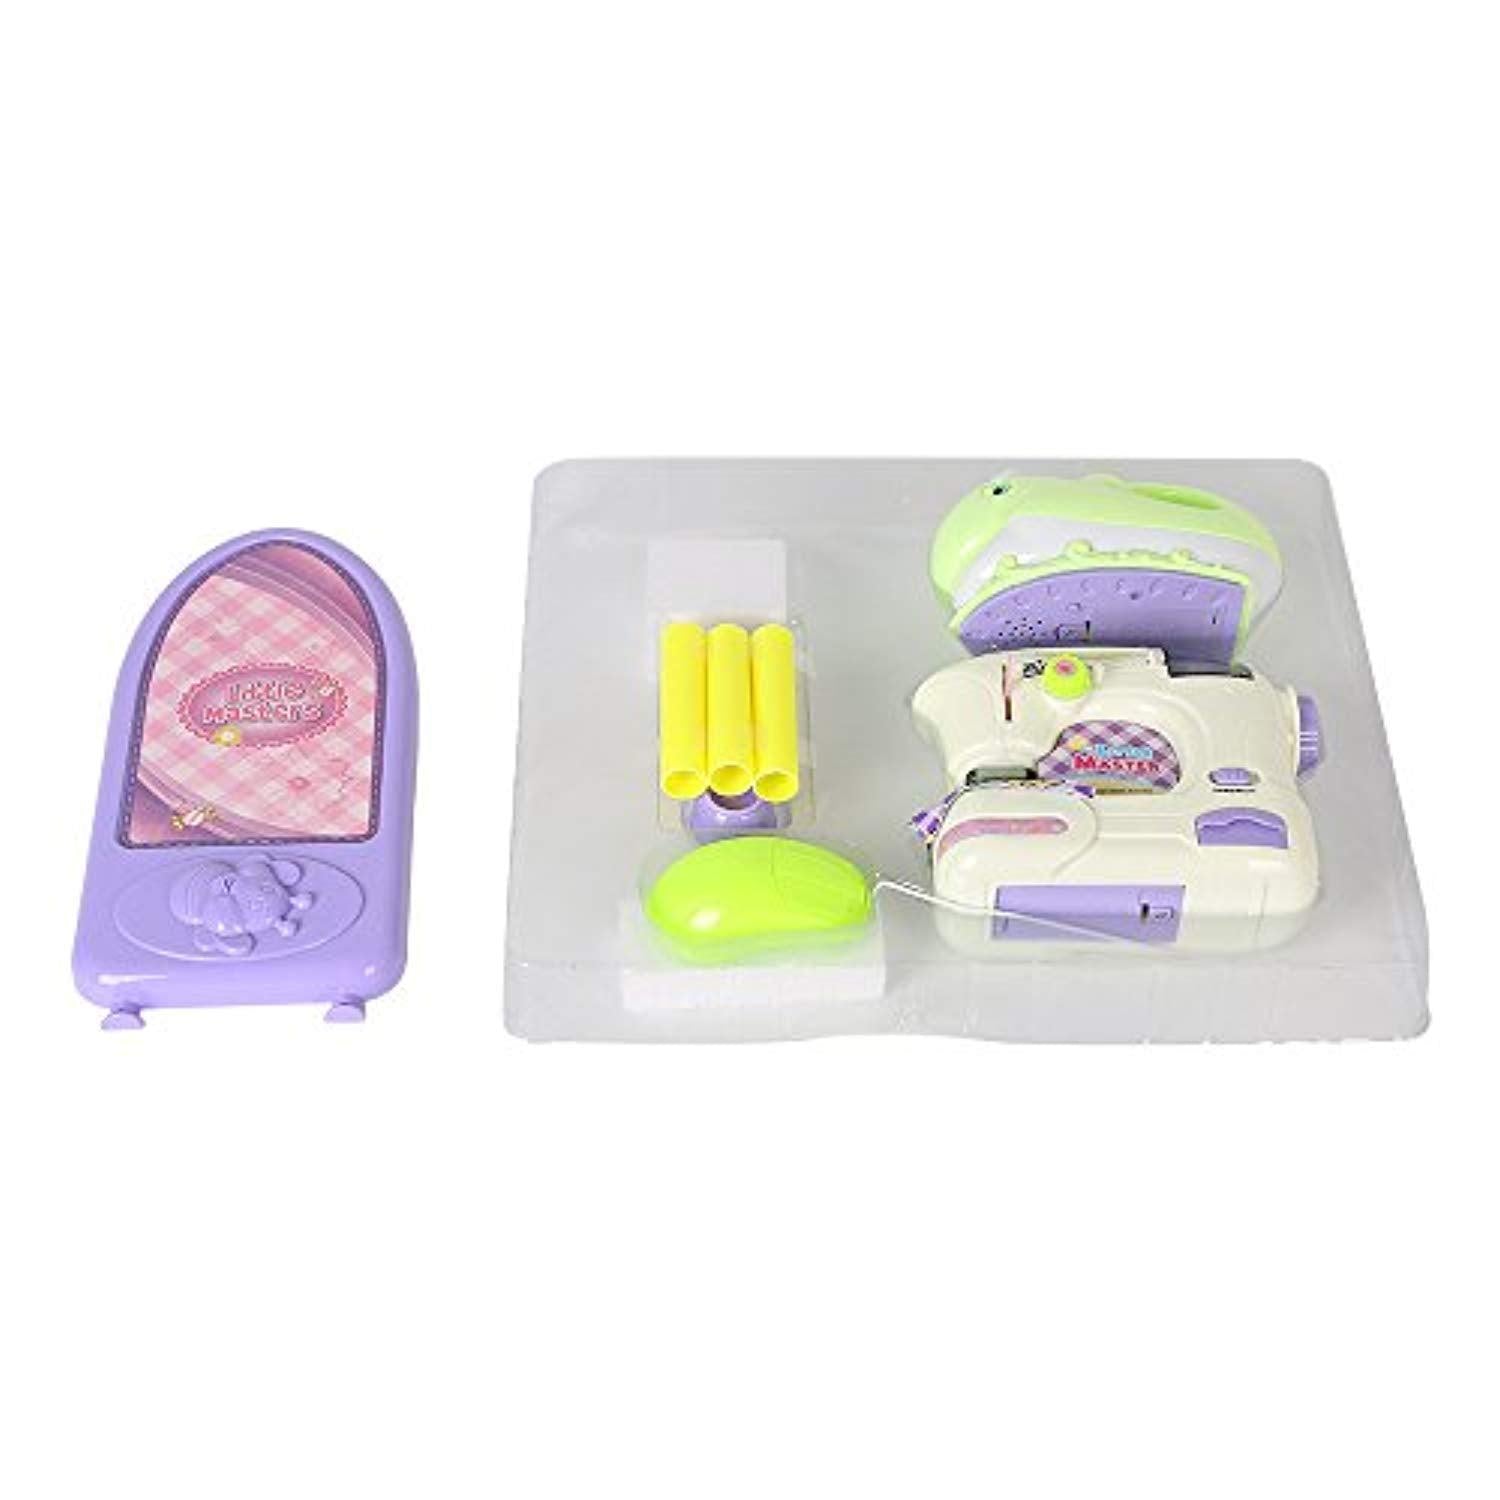 Bosonshop Children Mini Appliances Series Housekeeping Sewing Toy